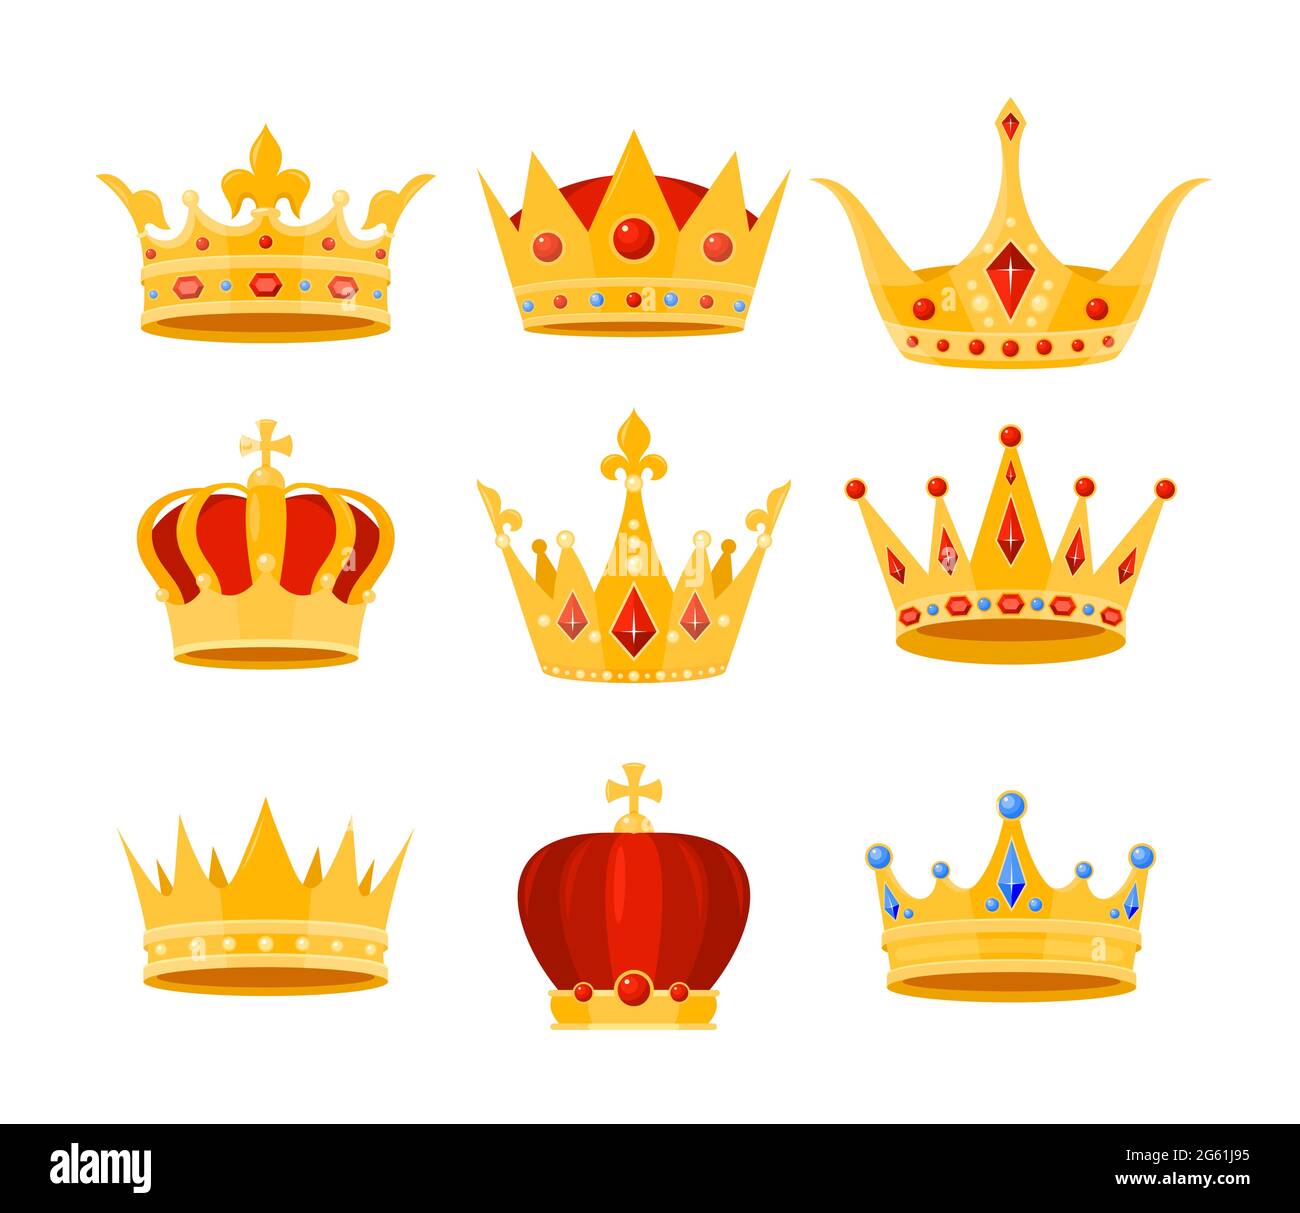 Corona Rey Y Reina Dibujo Corona Princesa Real Ilustrador De